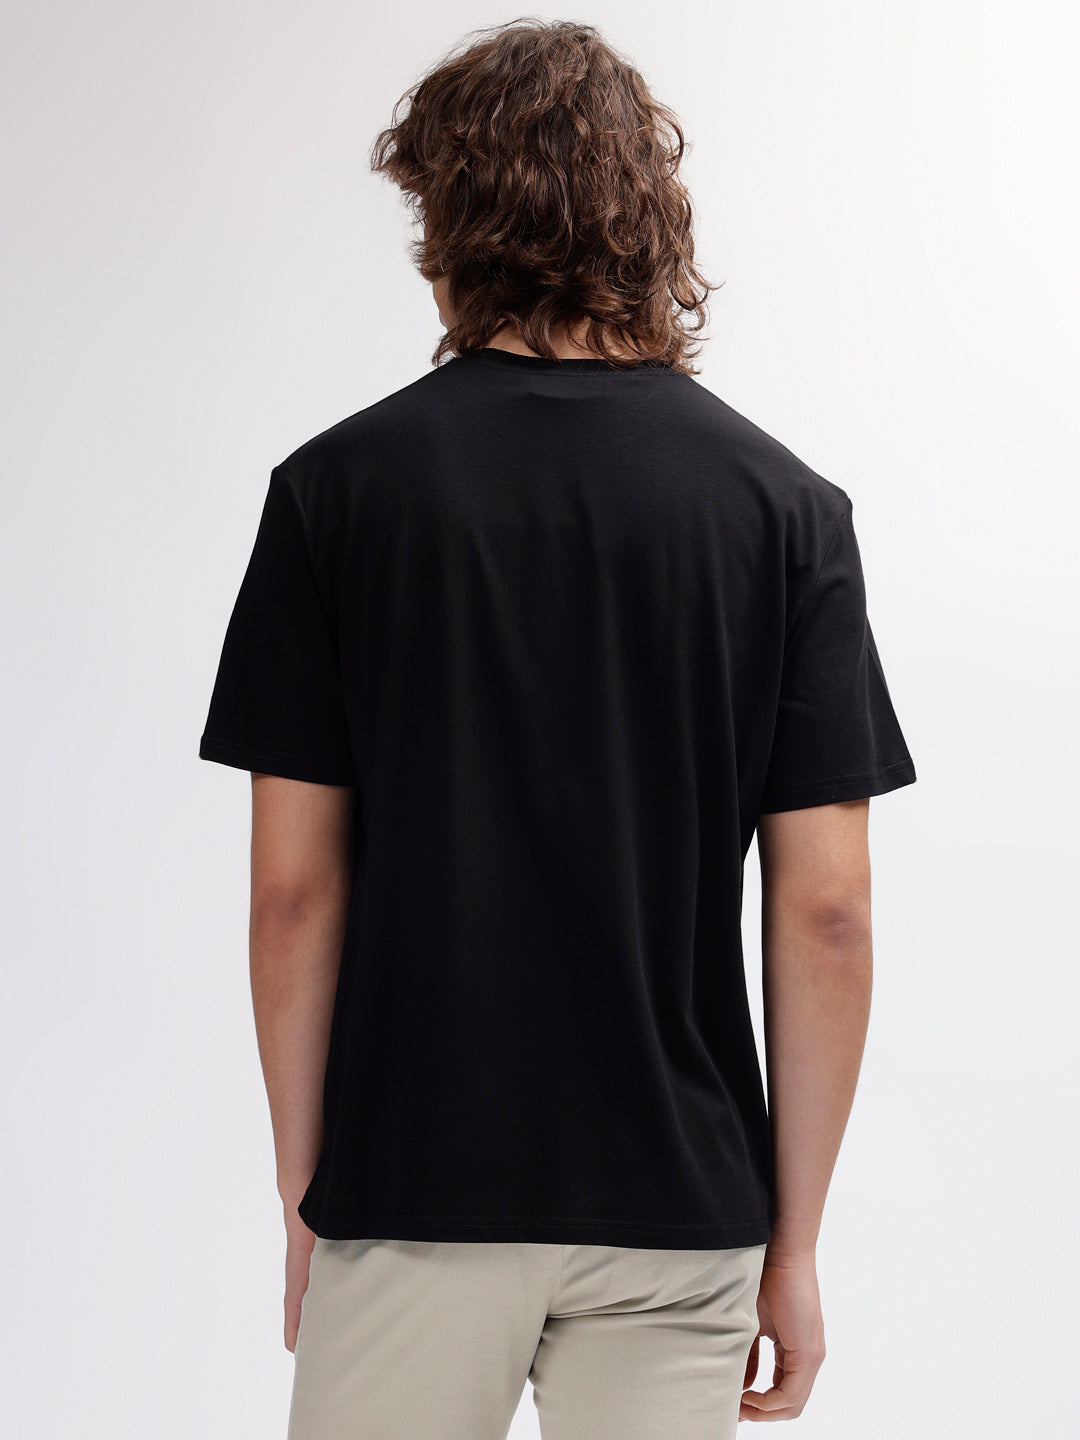 Just Cavalli Men Black Printed Round Neck Short Sleeves T-shirt